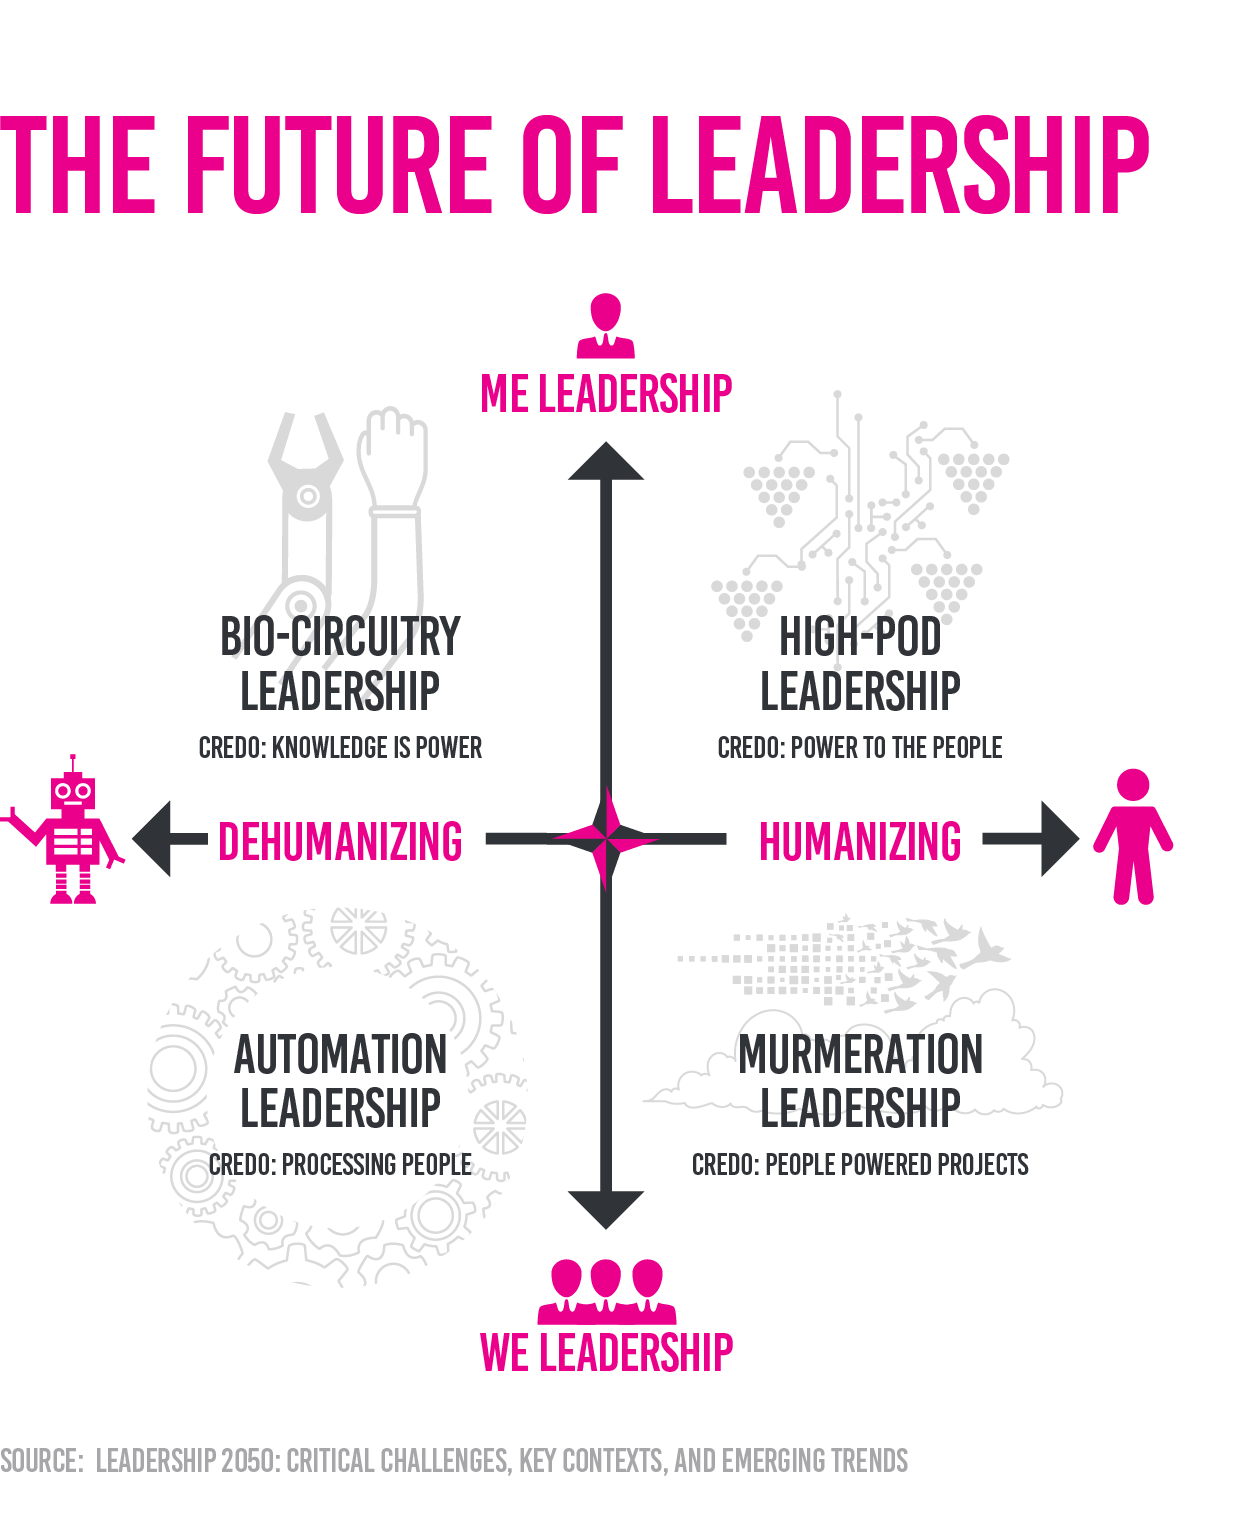 The future of leadership